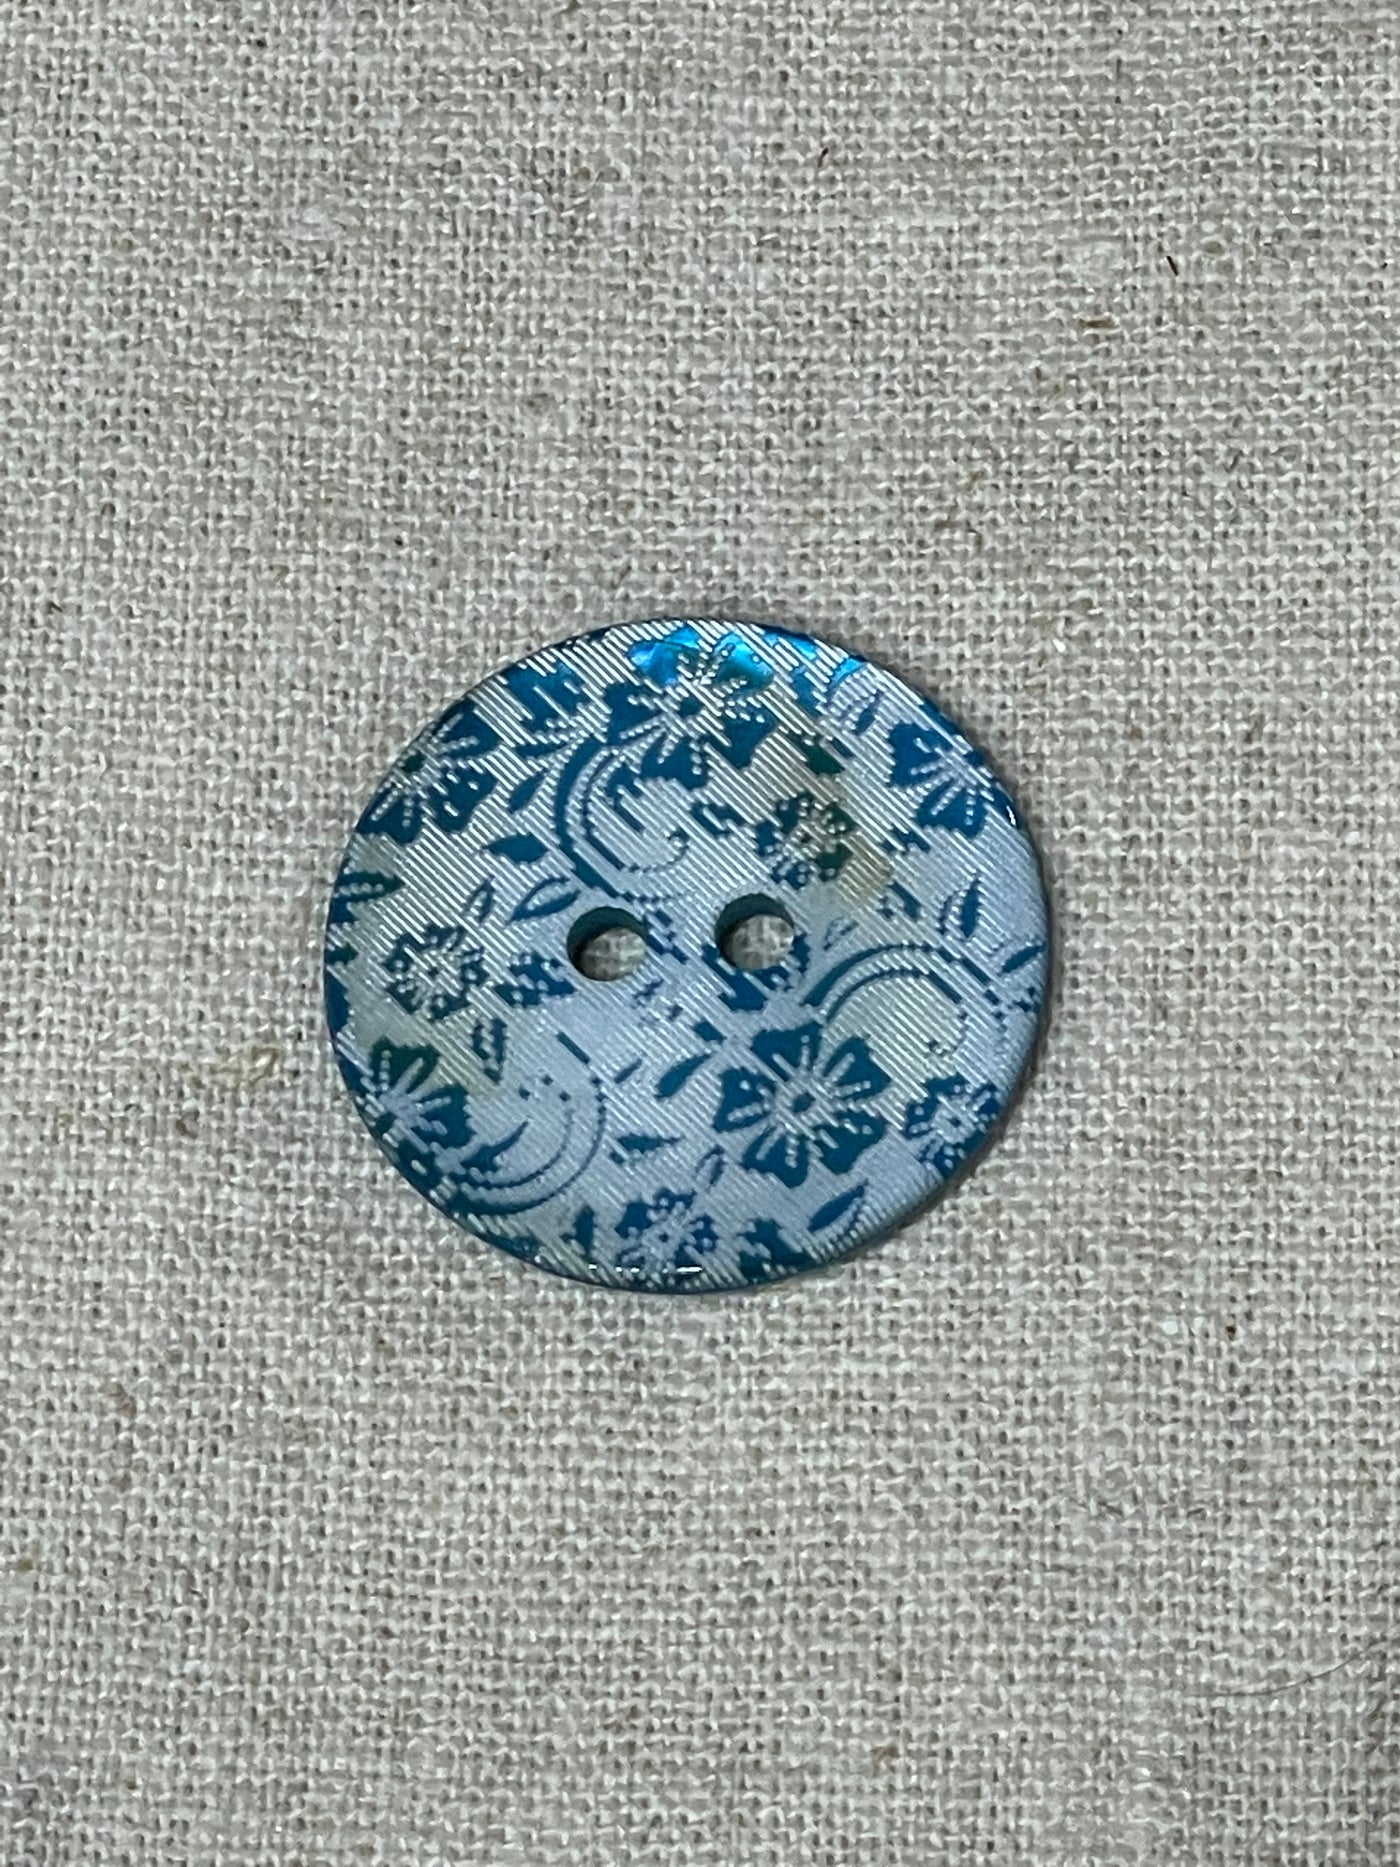 Floral Buttons 